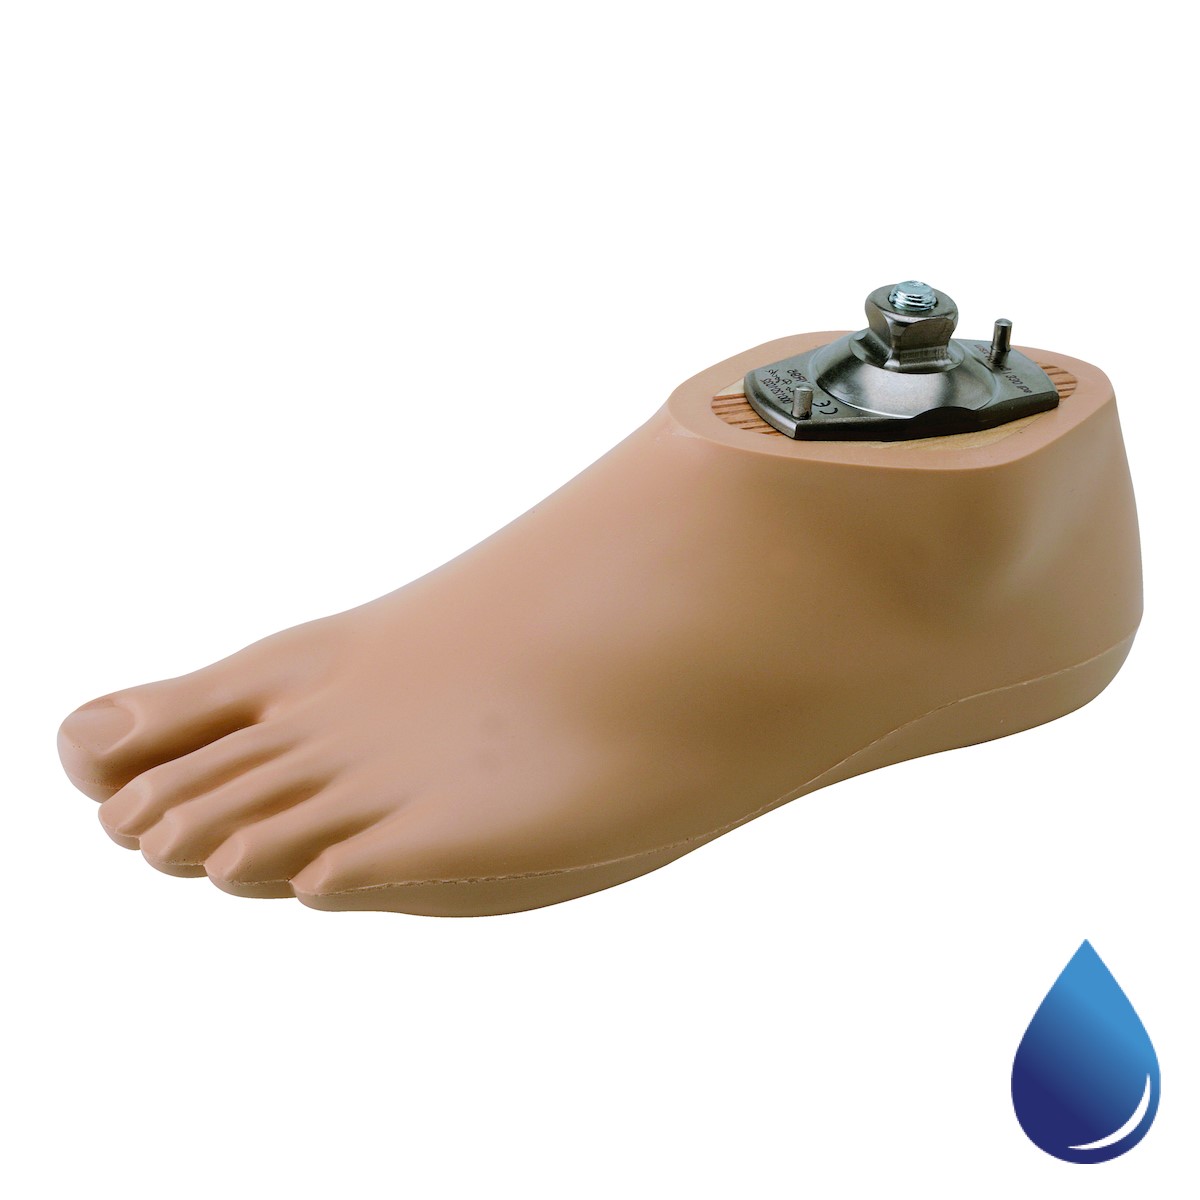 Feet - Mechanical, Lower Limb Prosthetics, Prosthetics